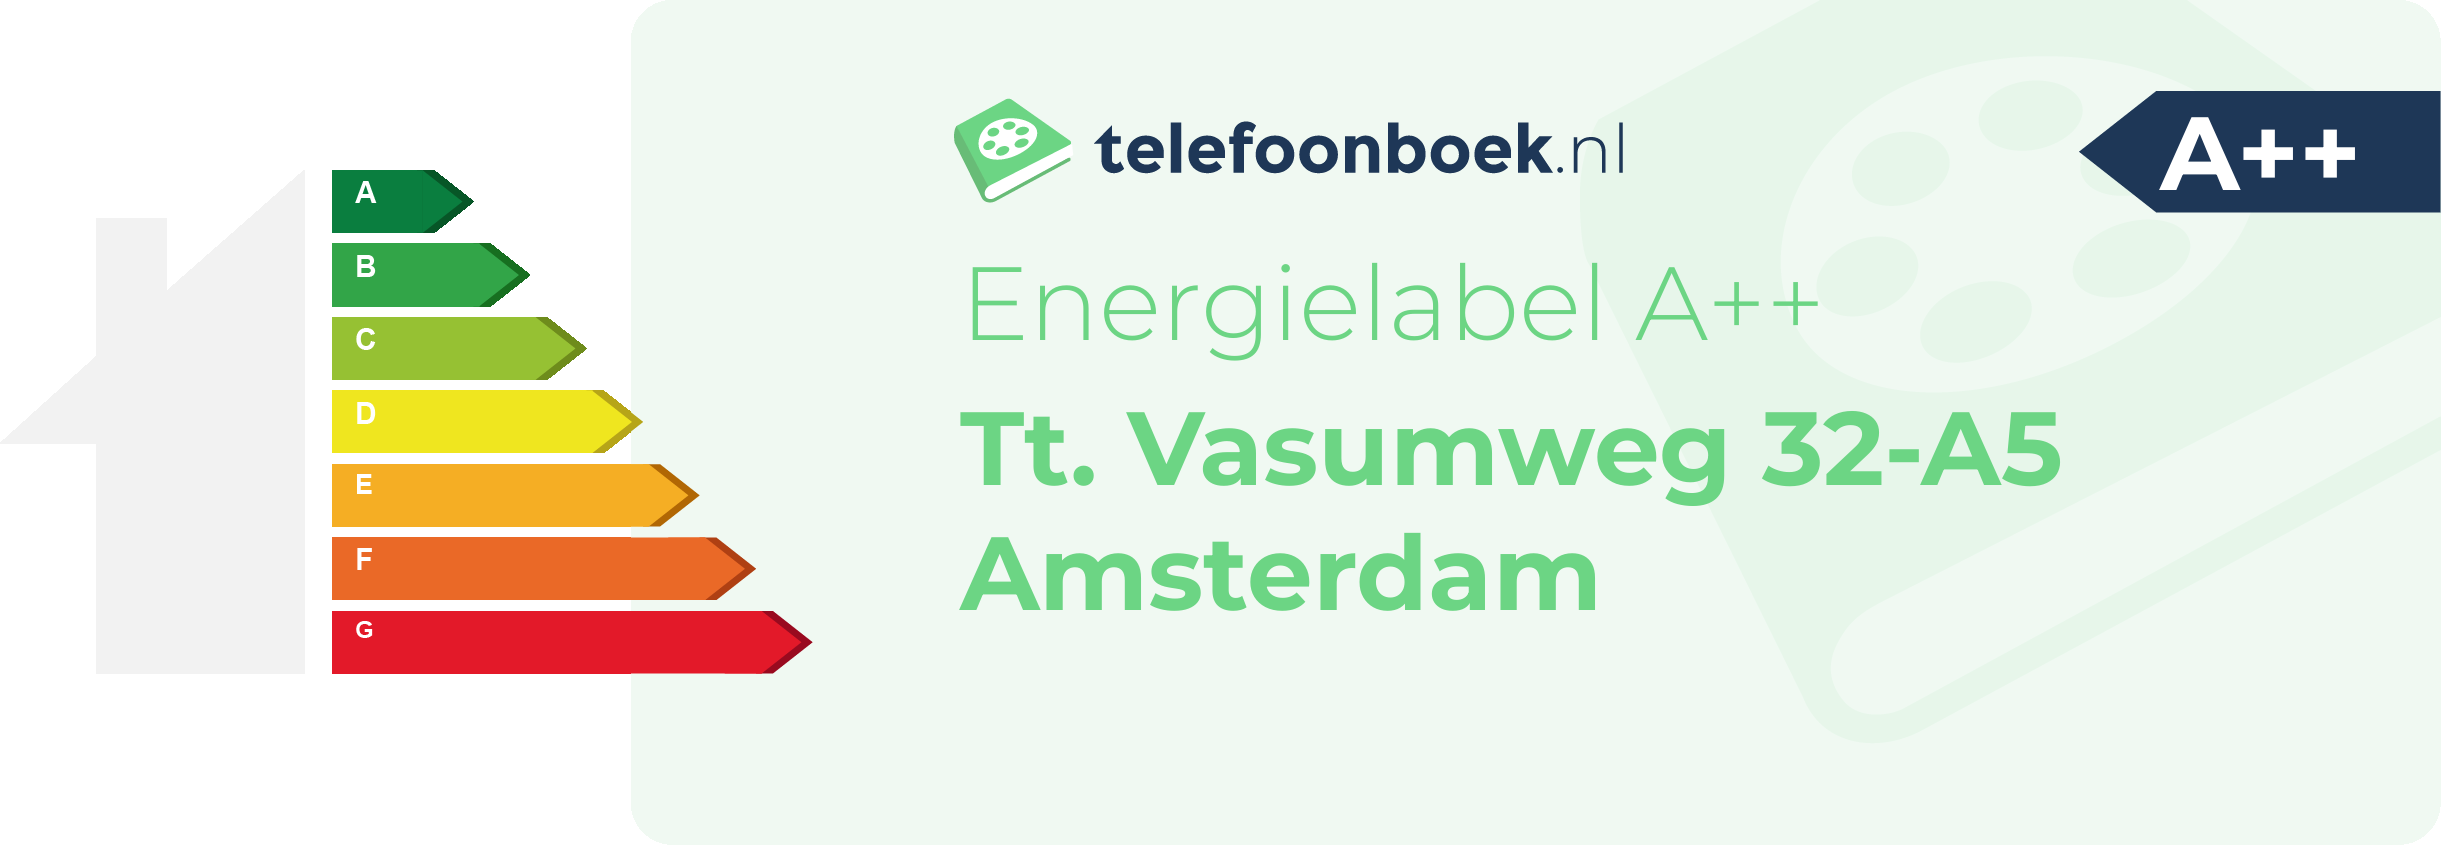 Energielabel Tt. Vasumweg 32-A5 Amsterdam